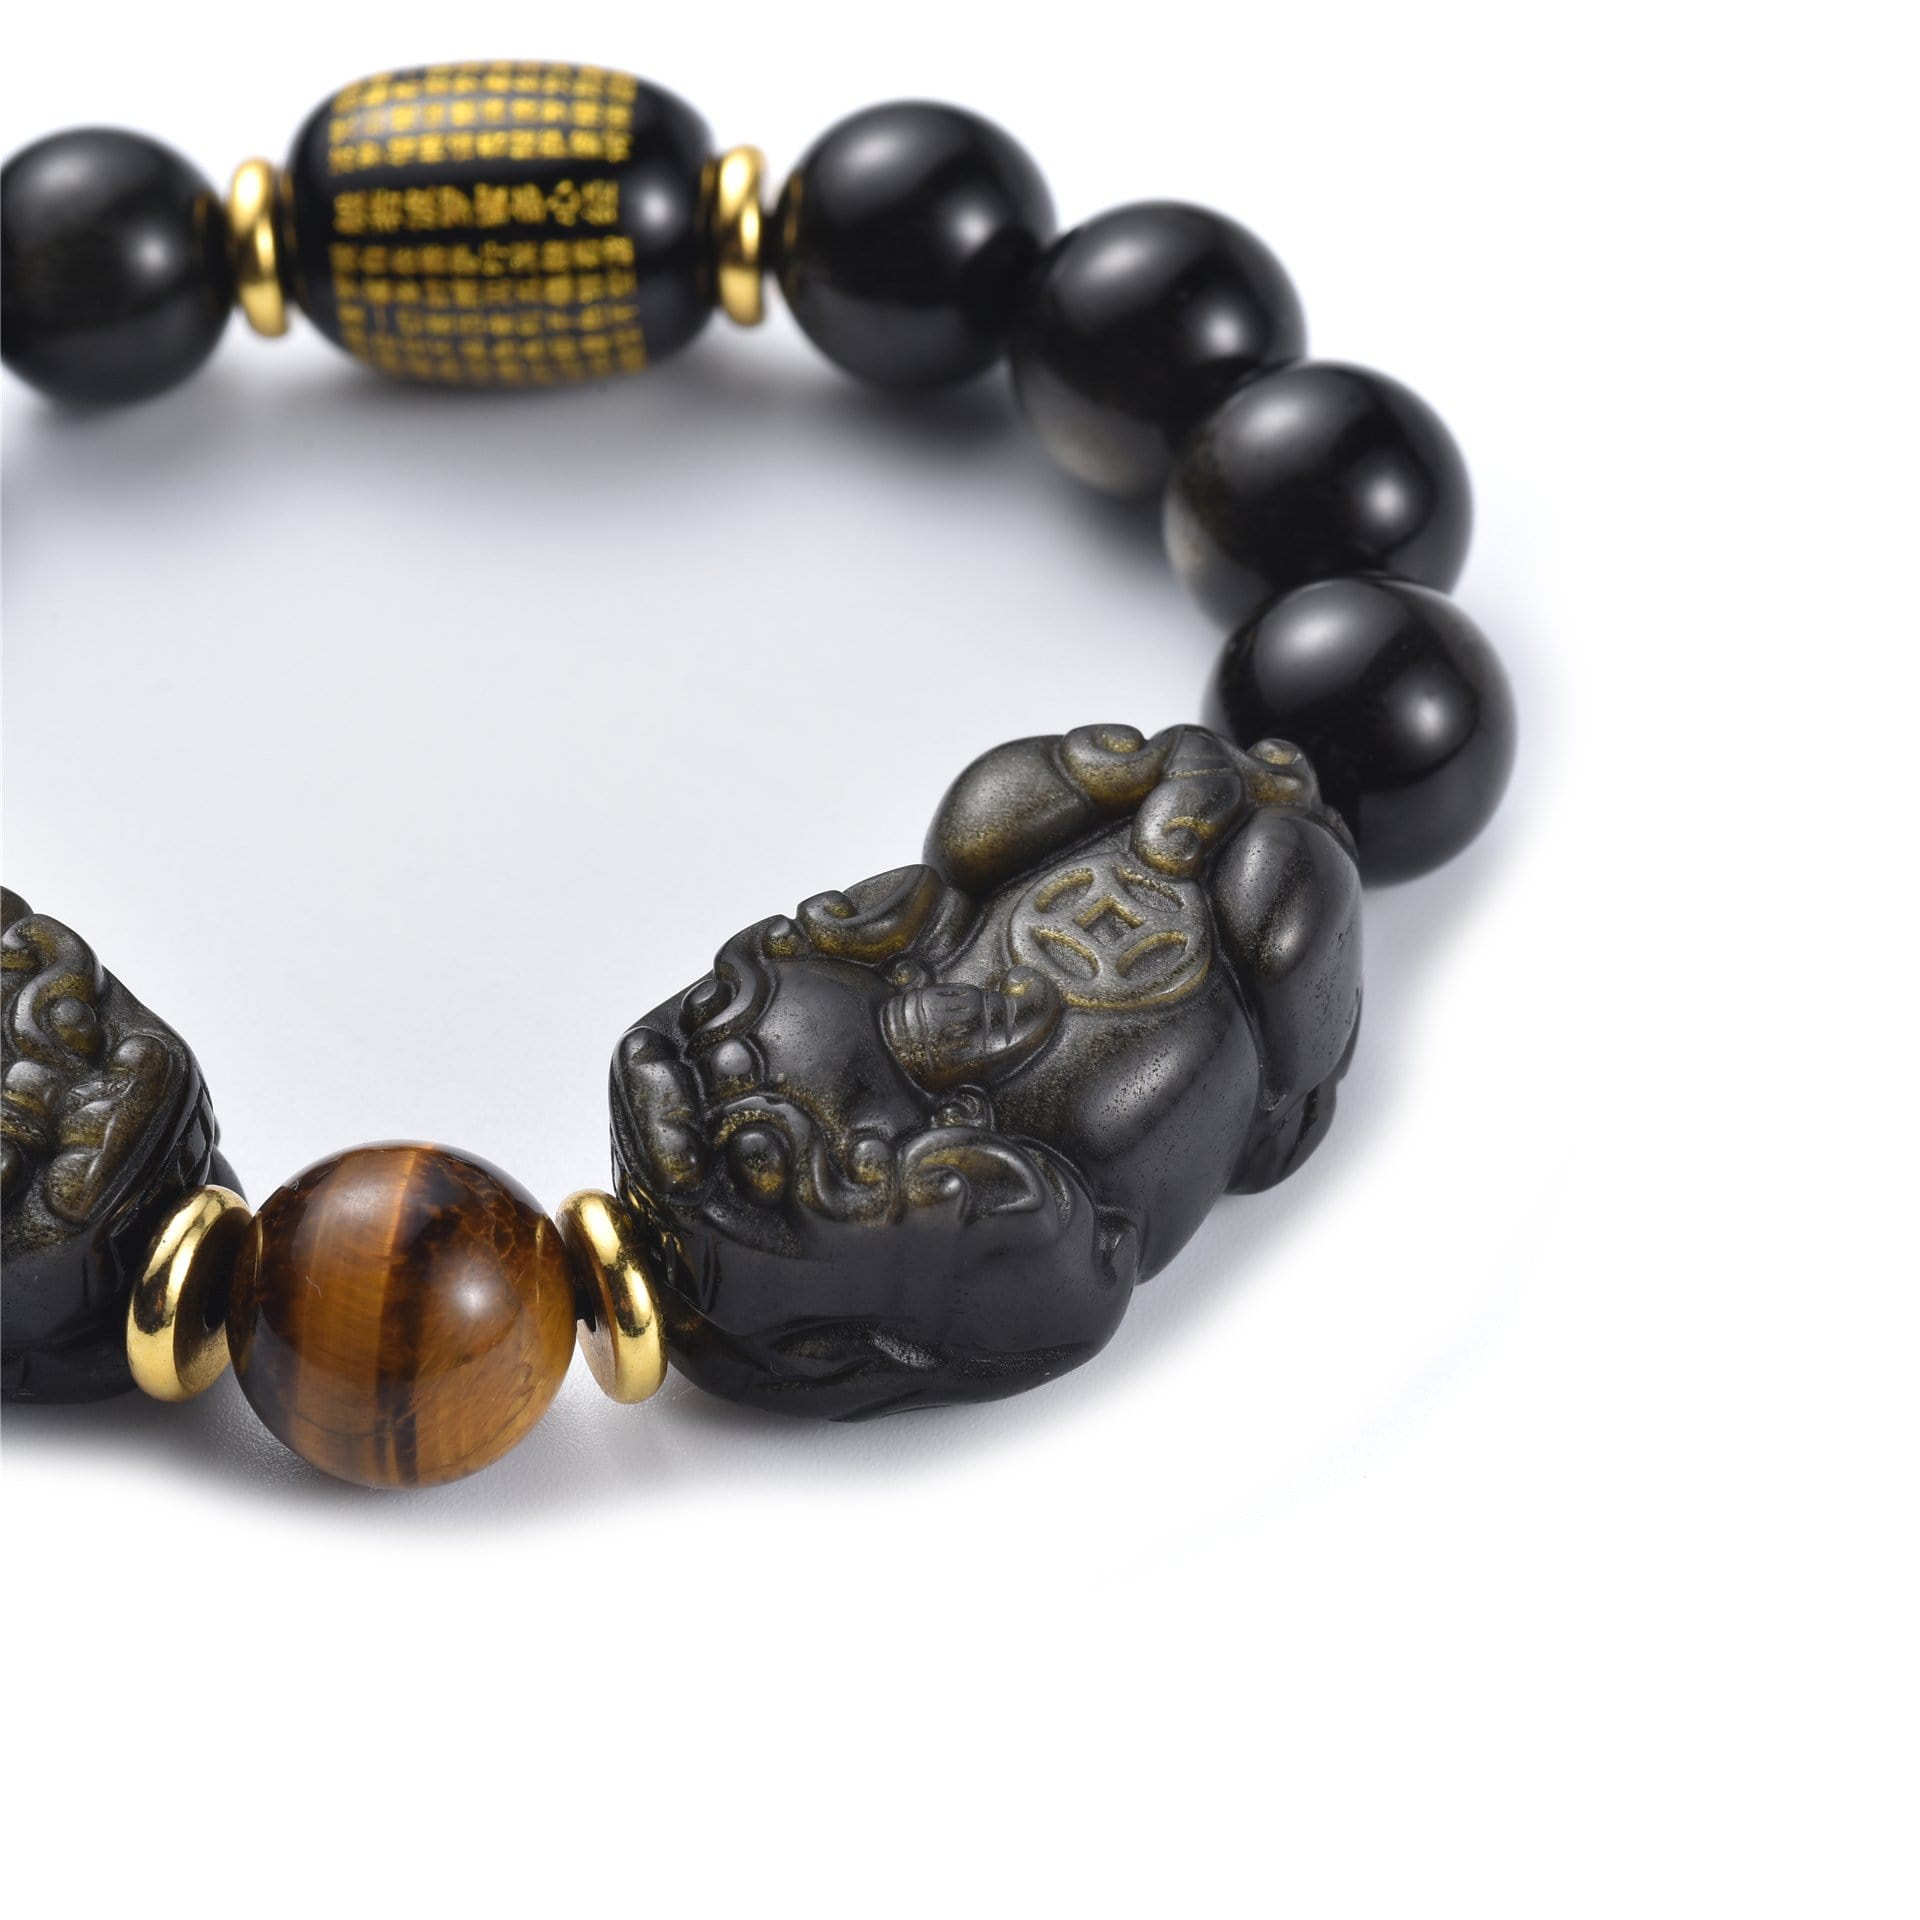 Fortunehouses Bracelet Natural Gold Obsidian Double Pi Yao Wealth Bracelet